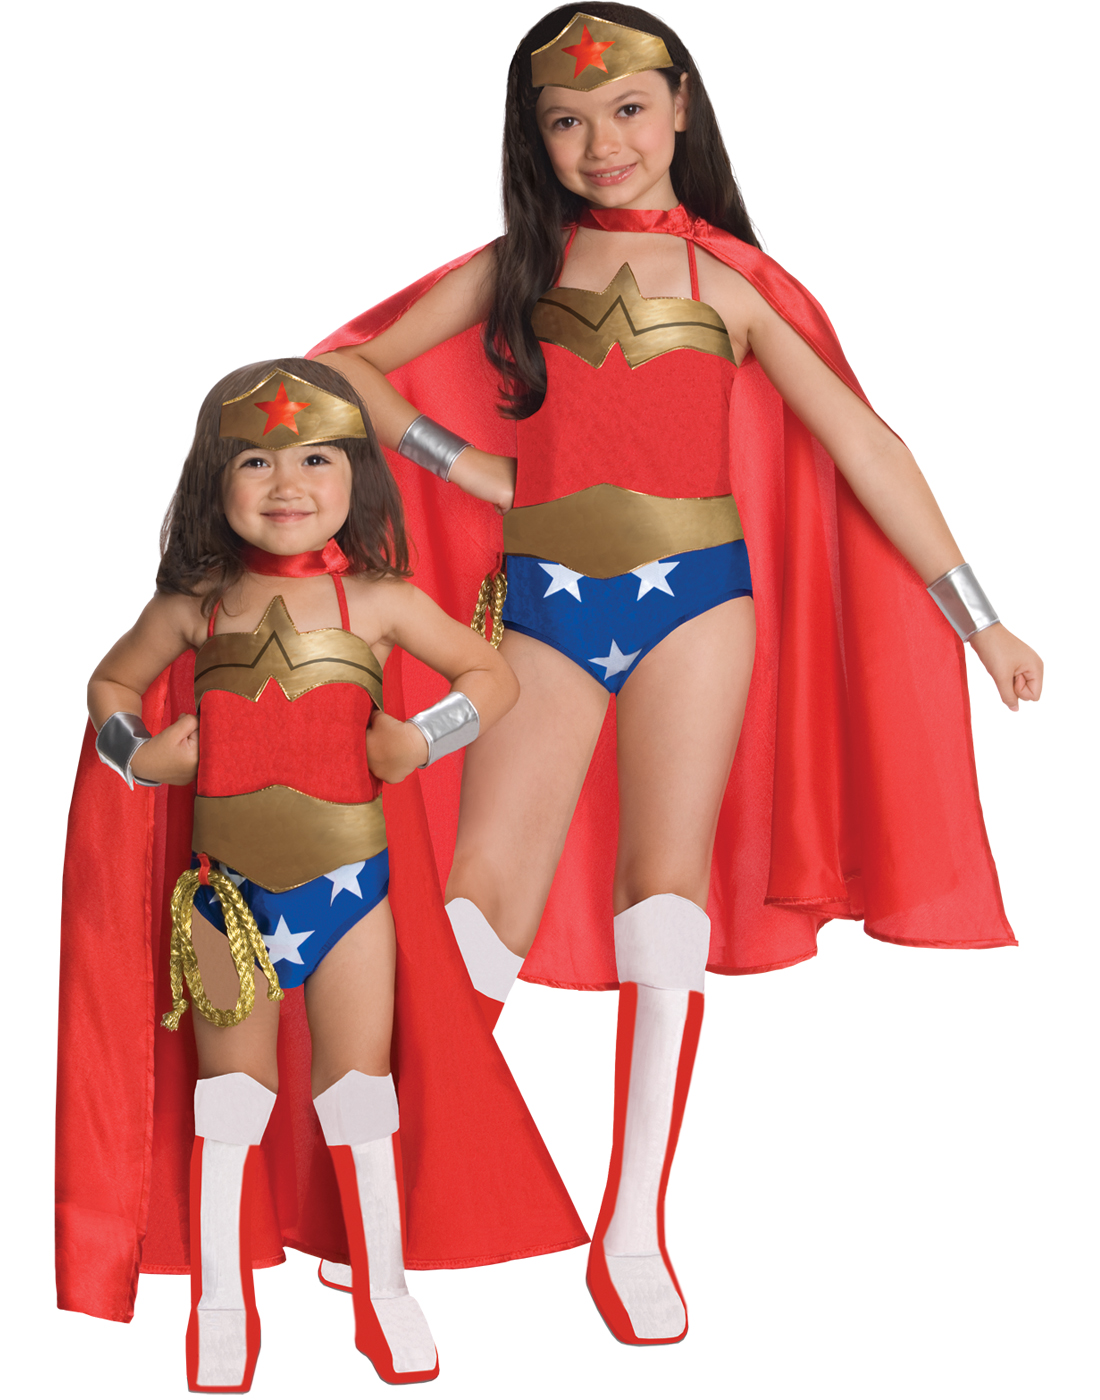 Justice League DC Comics Wonder Woman Child Halloween Costume - image 2 of 4